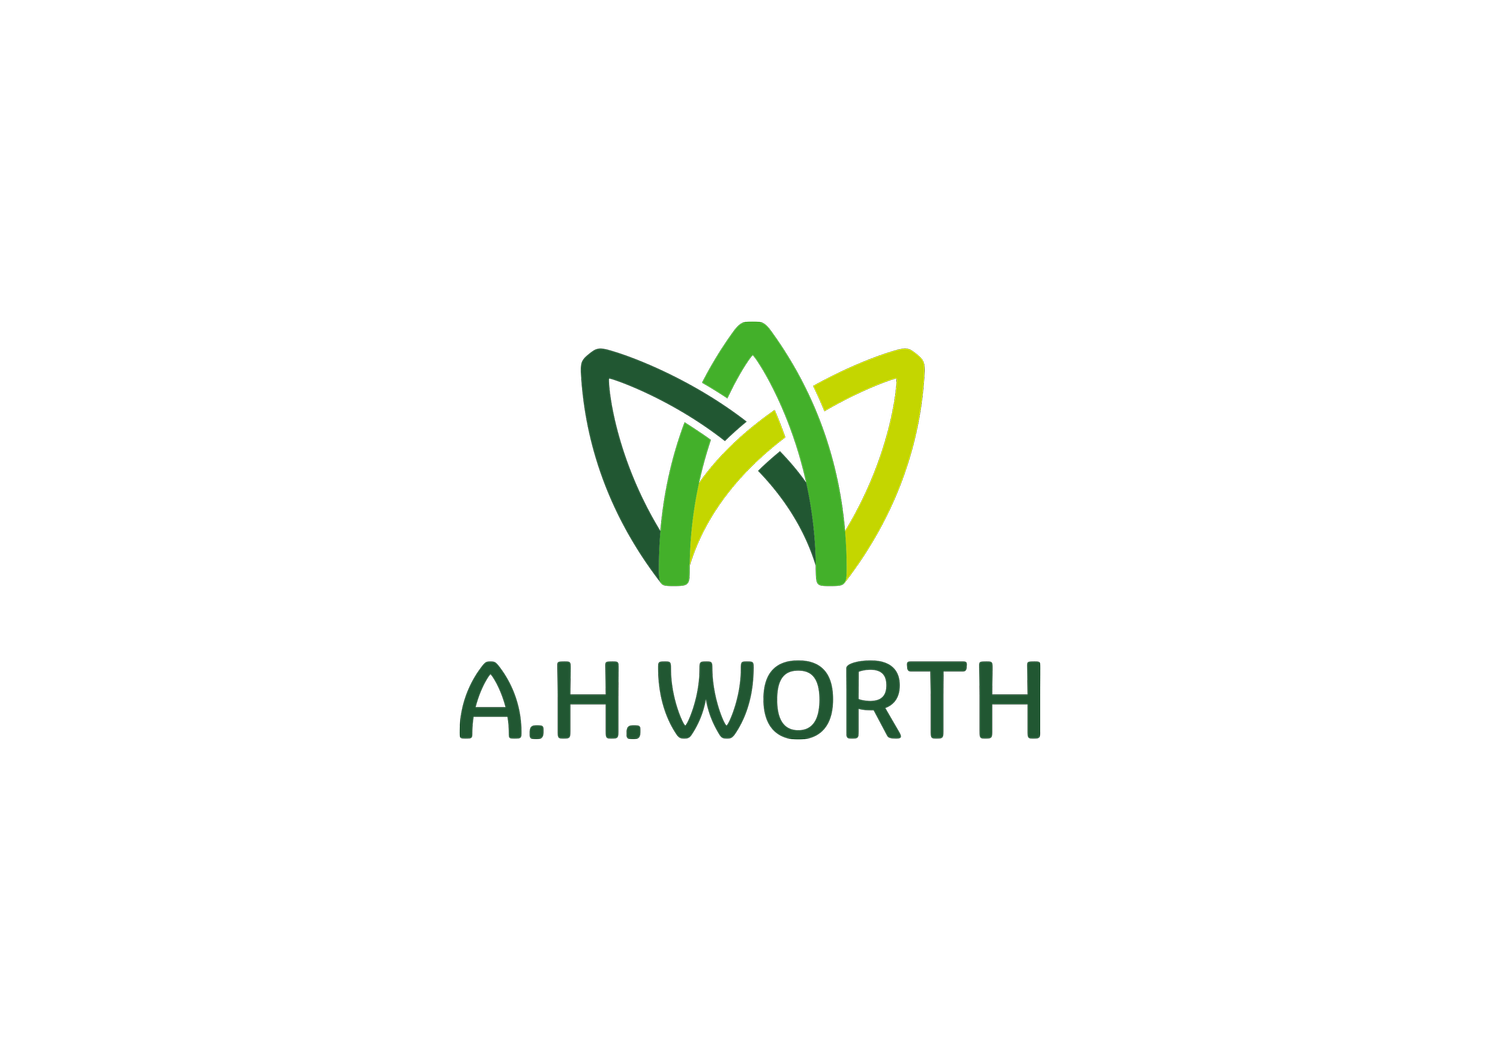 A.H. Worth